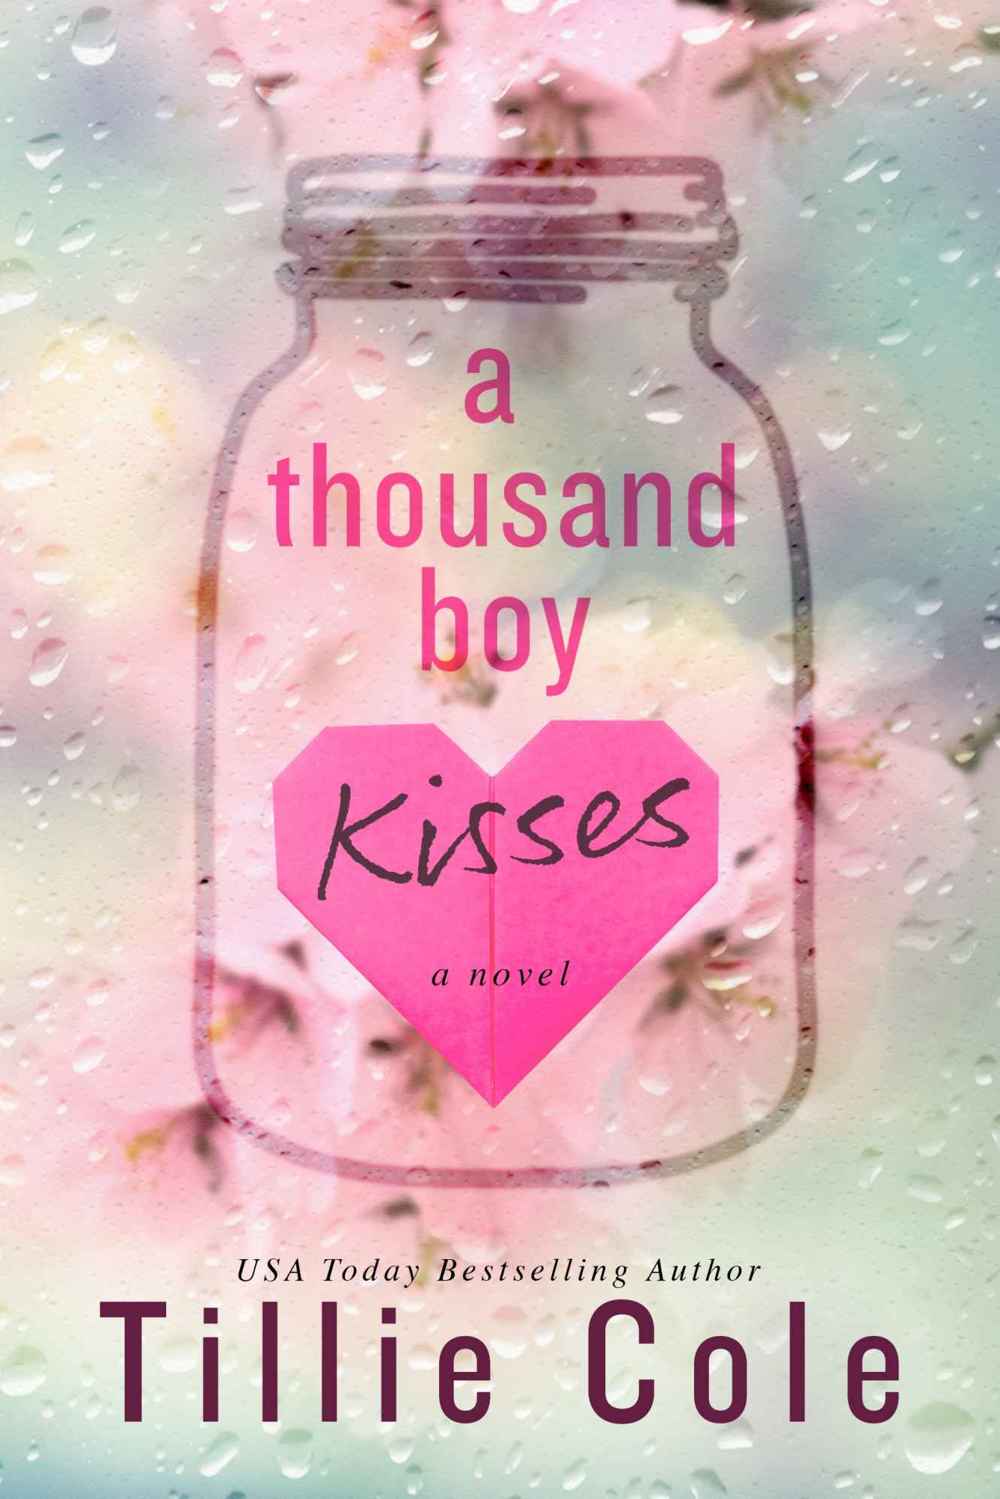 A Thousand Boy Kisses free book download